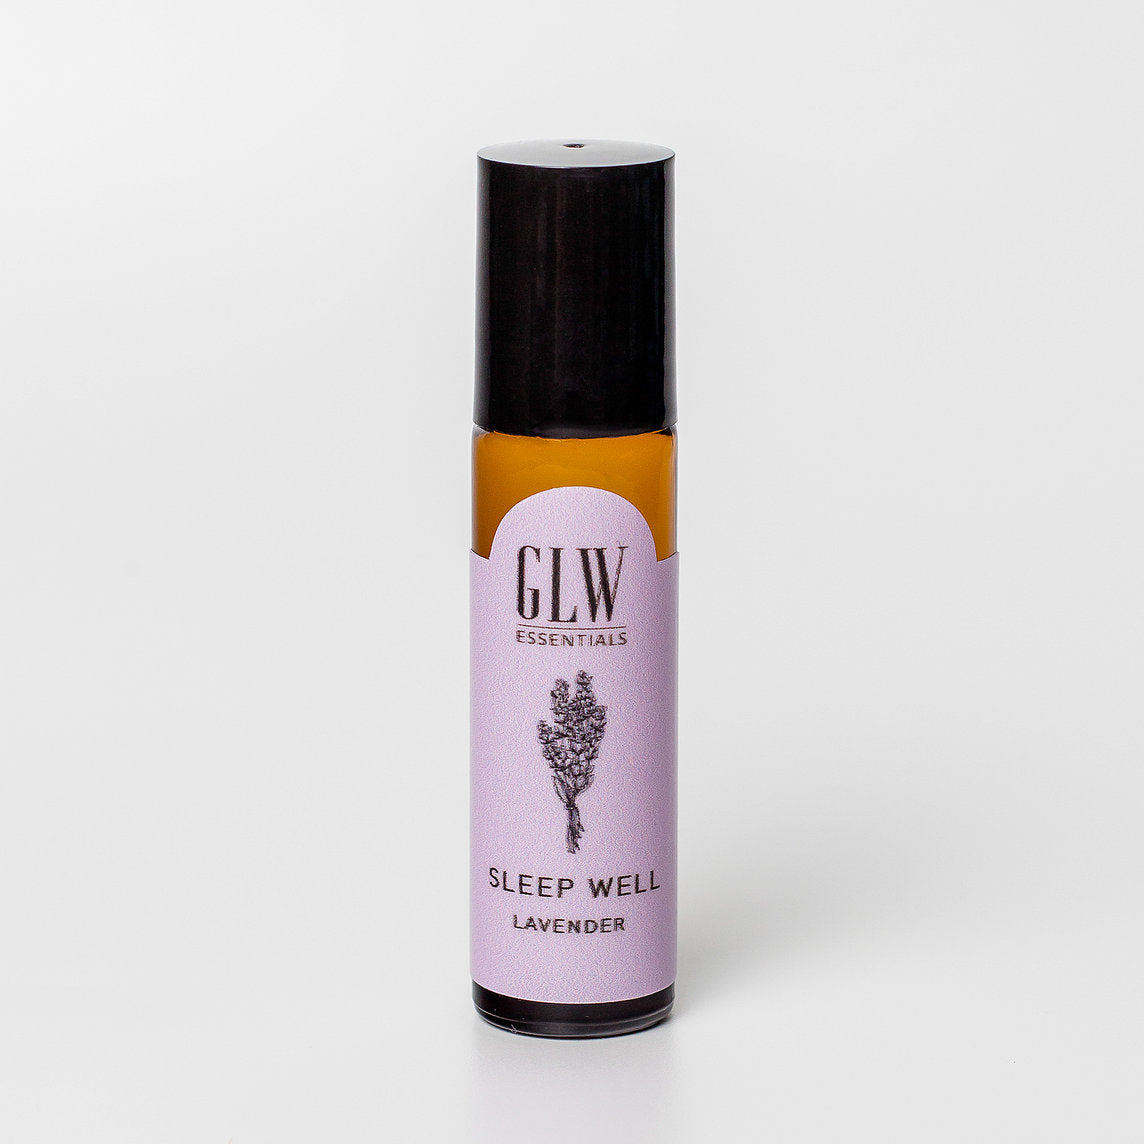 GLW Essentials Oil Blends (10ml)